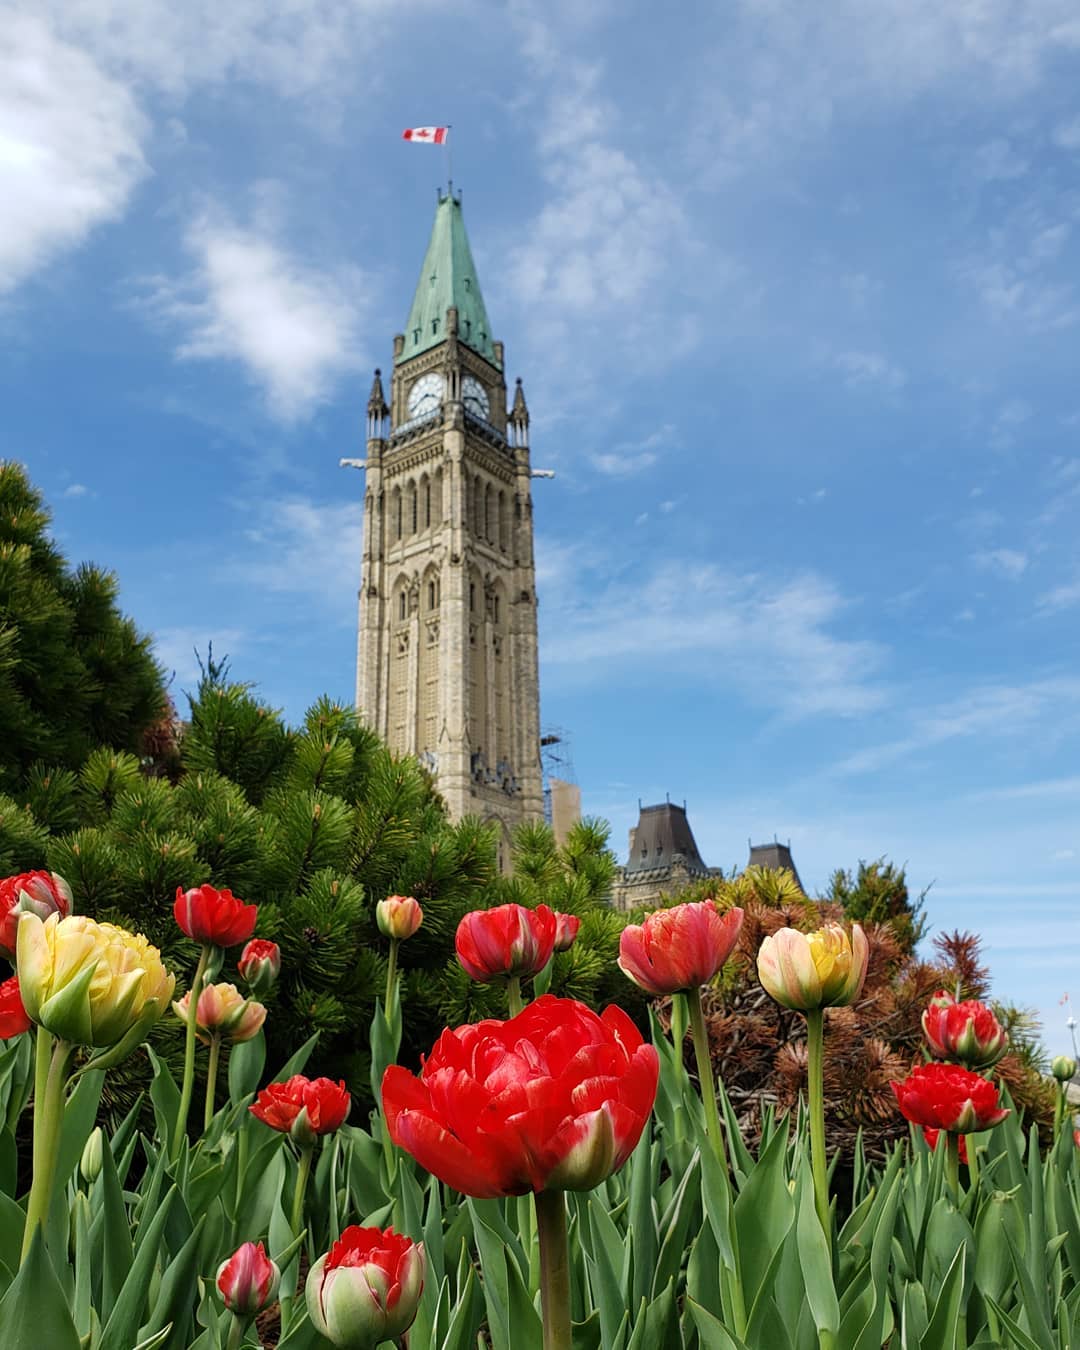 Blue skies provide a nice backdrop to the tulips at Parliament Hill #myottawa #ottawainbloom19 #tulipfestival #tulpen #discoverON #explorecanada #Canada